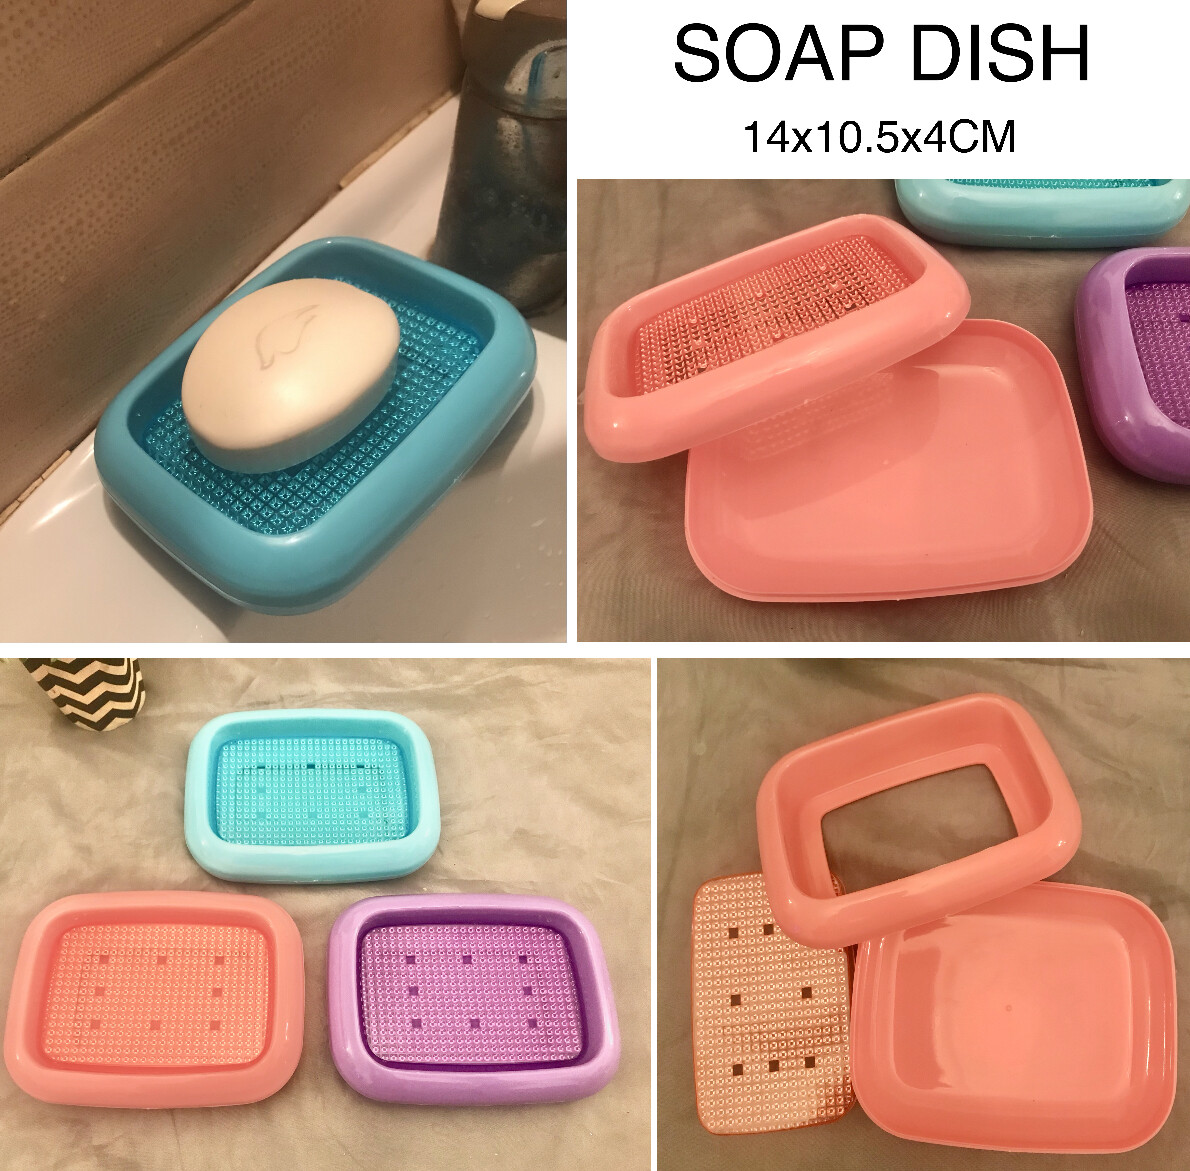 Soap Dish